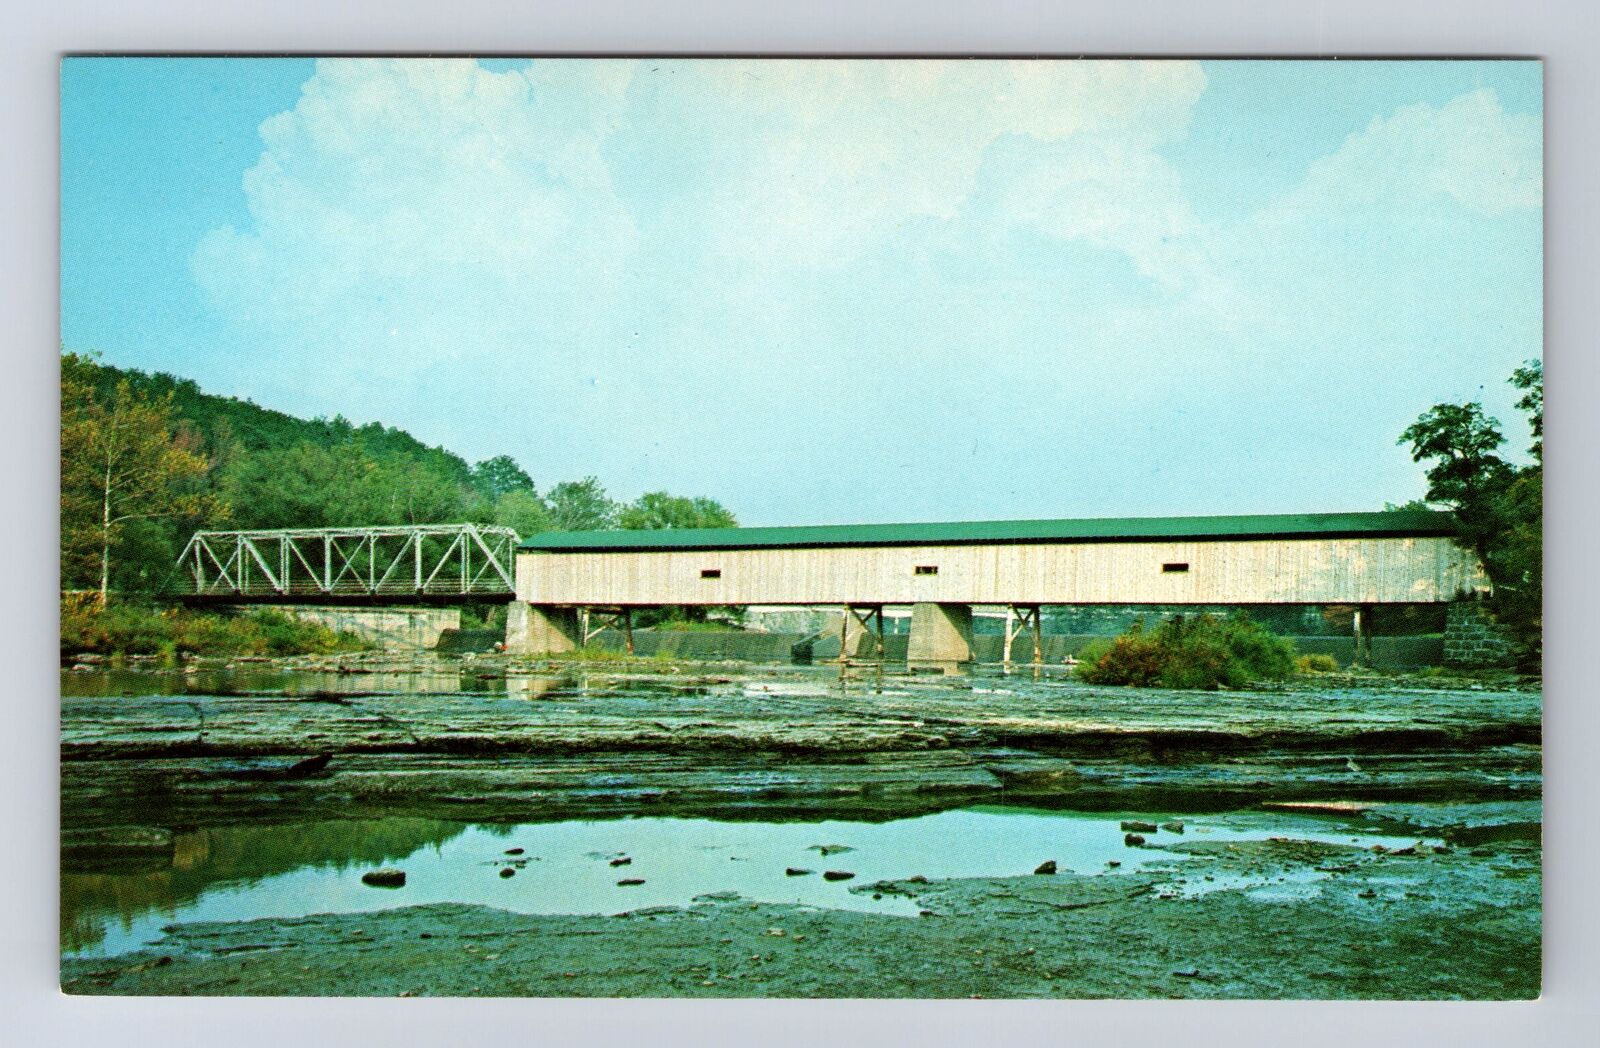 Harpersfield OH-Ohio, Grand Bridge, Grand River, Antique Vintage Postcard